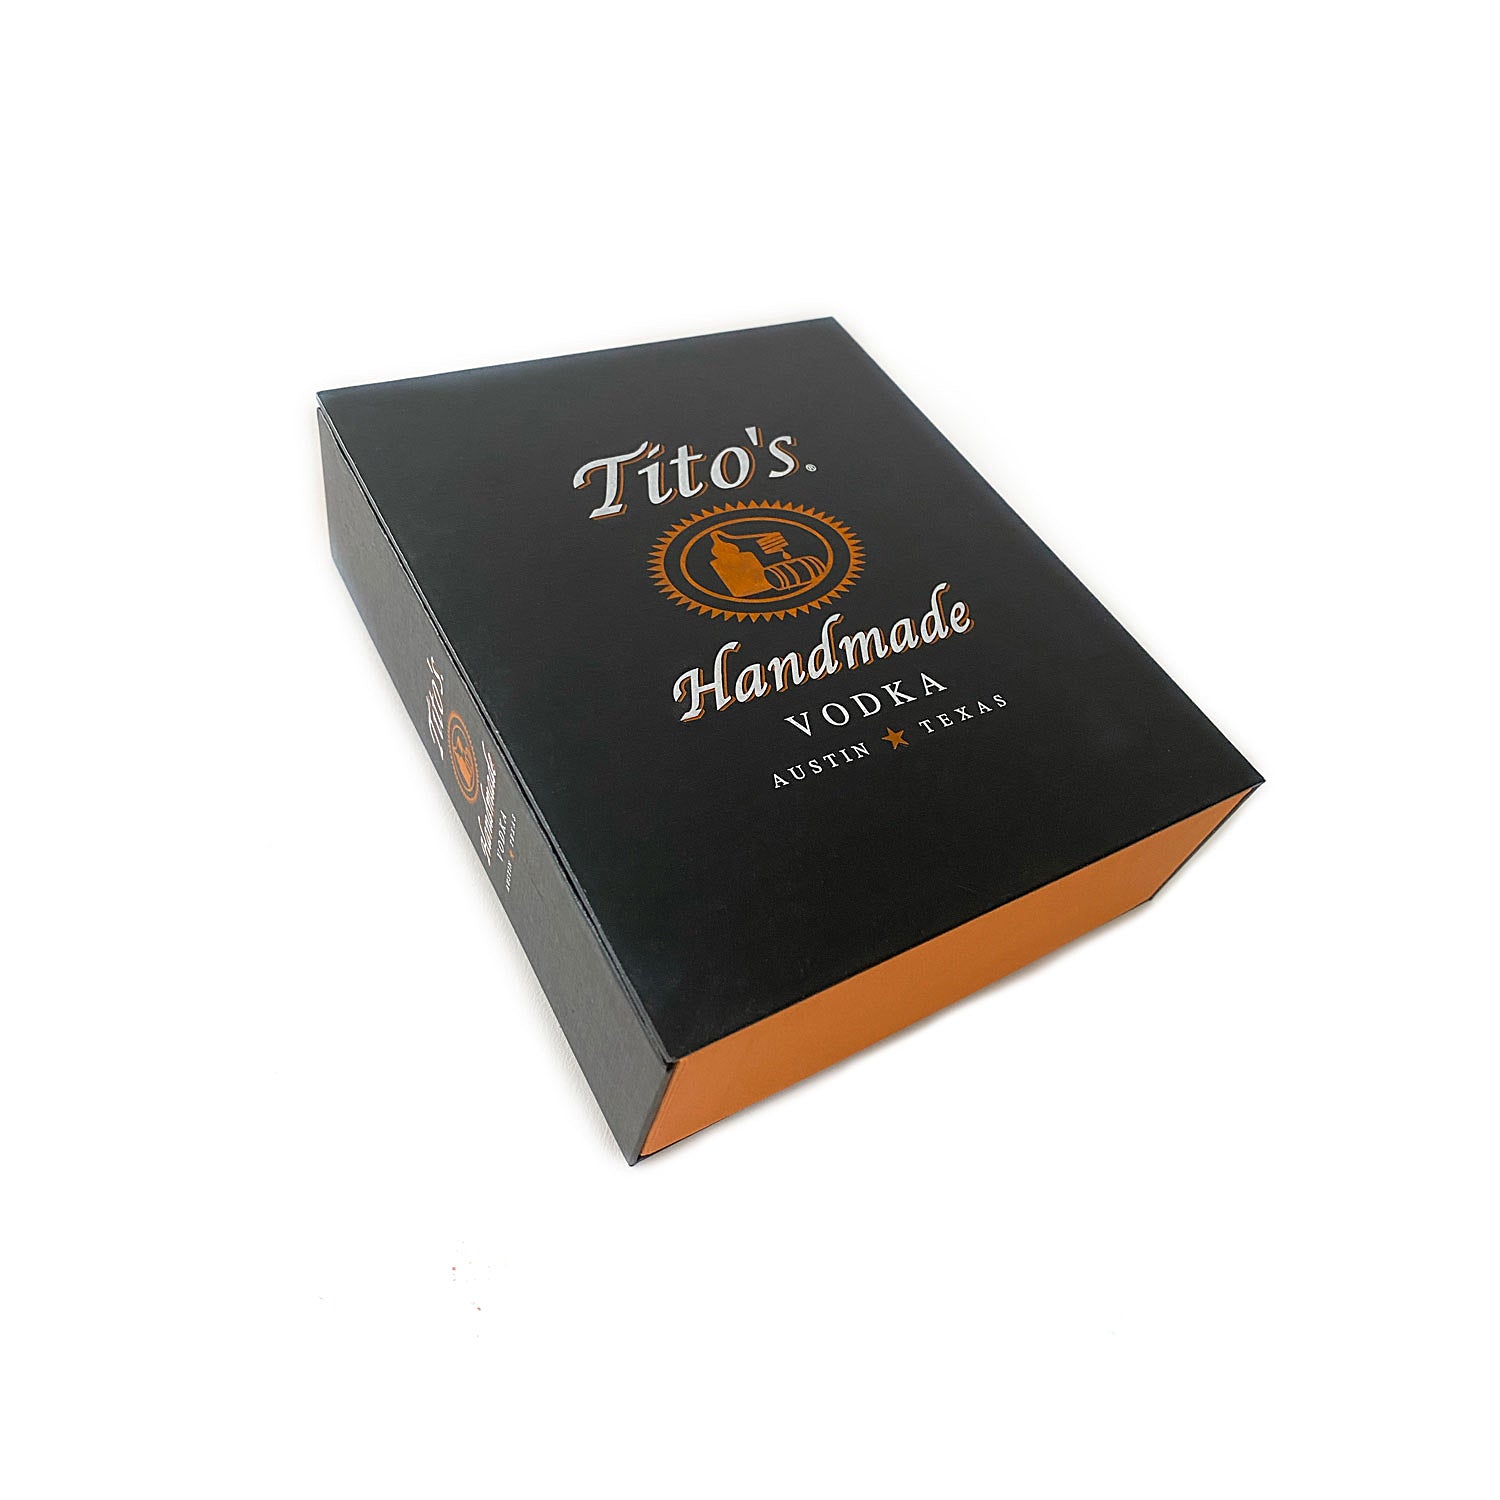 Tito's Massage Mixology Kit premium packaging box with Tito's Handmade Vodka logo